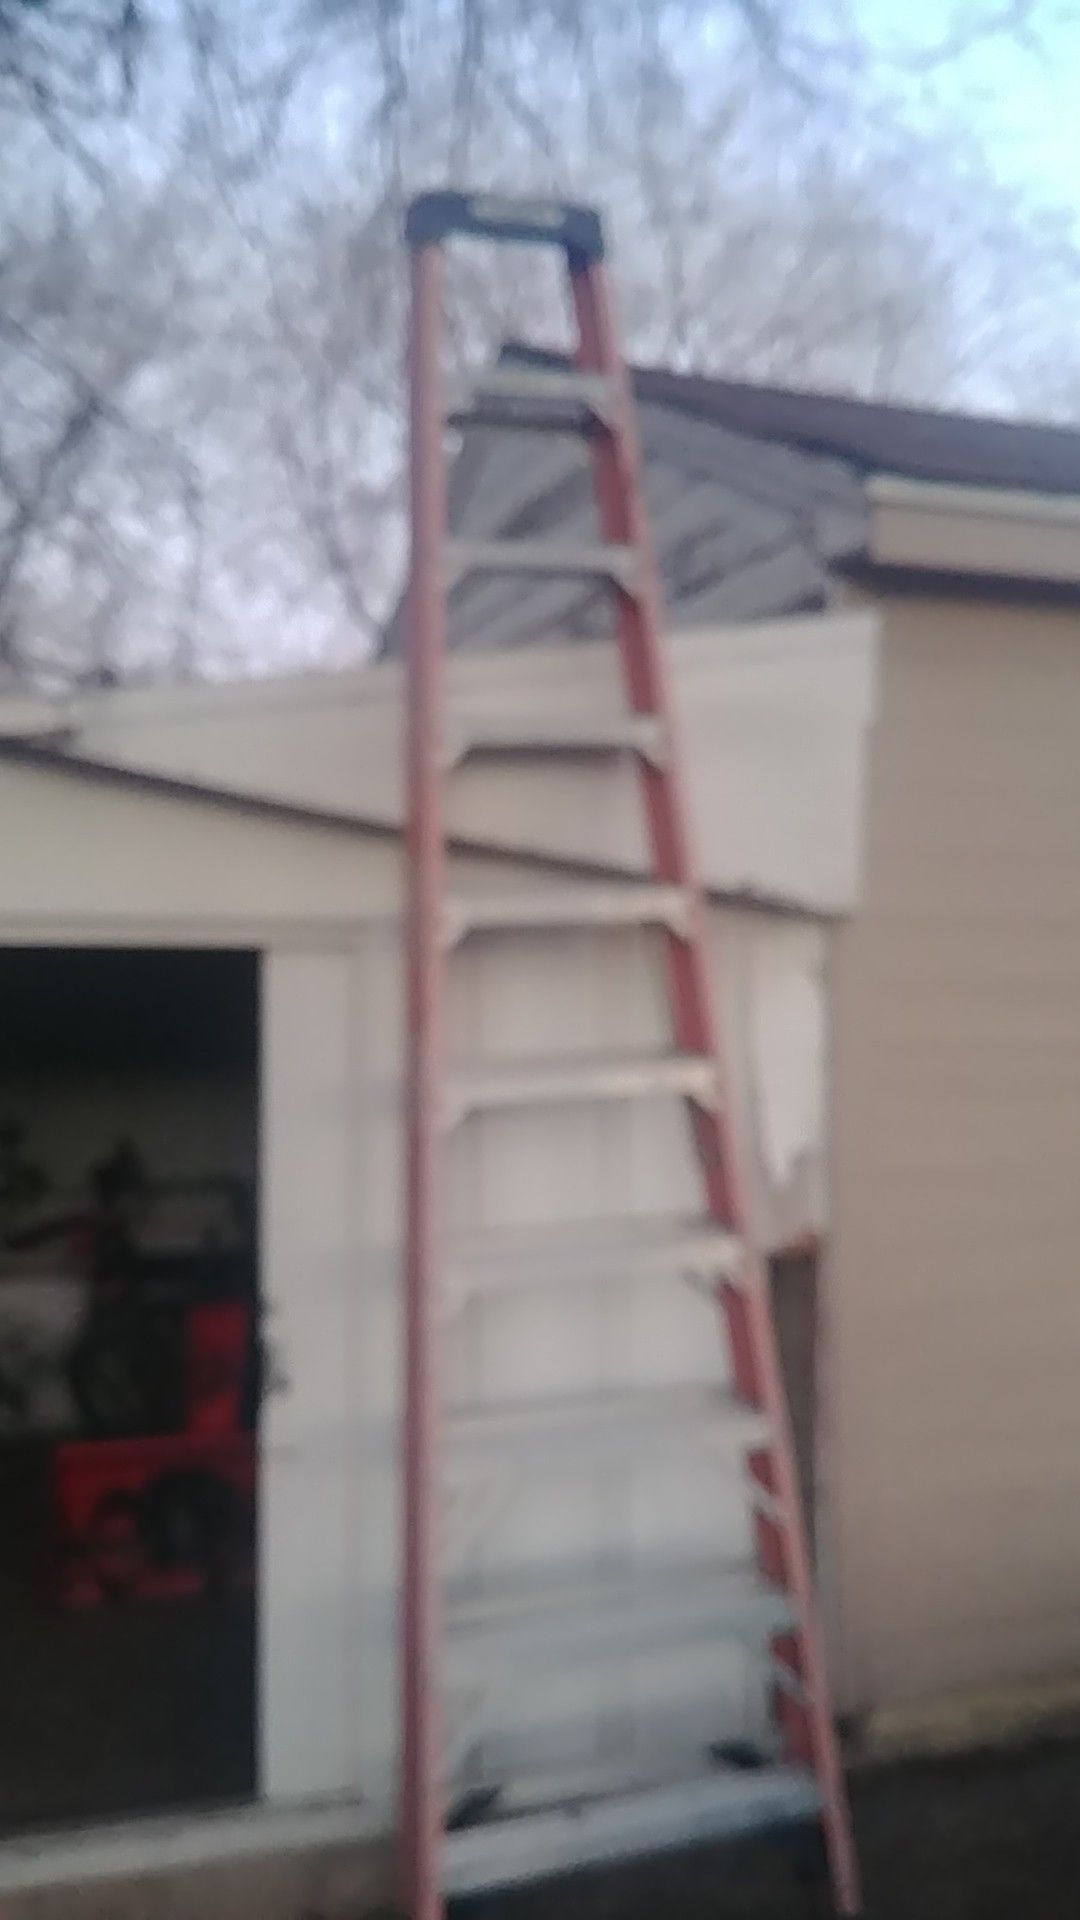 15' painters ladder